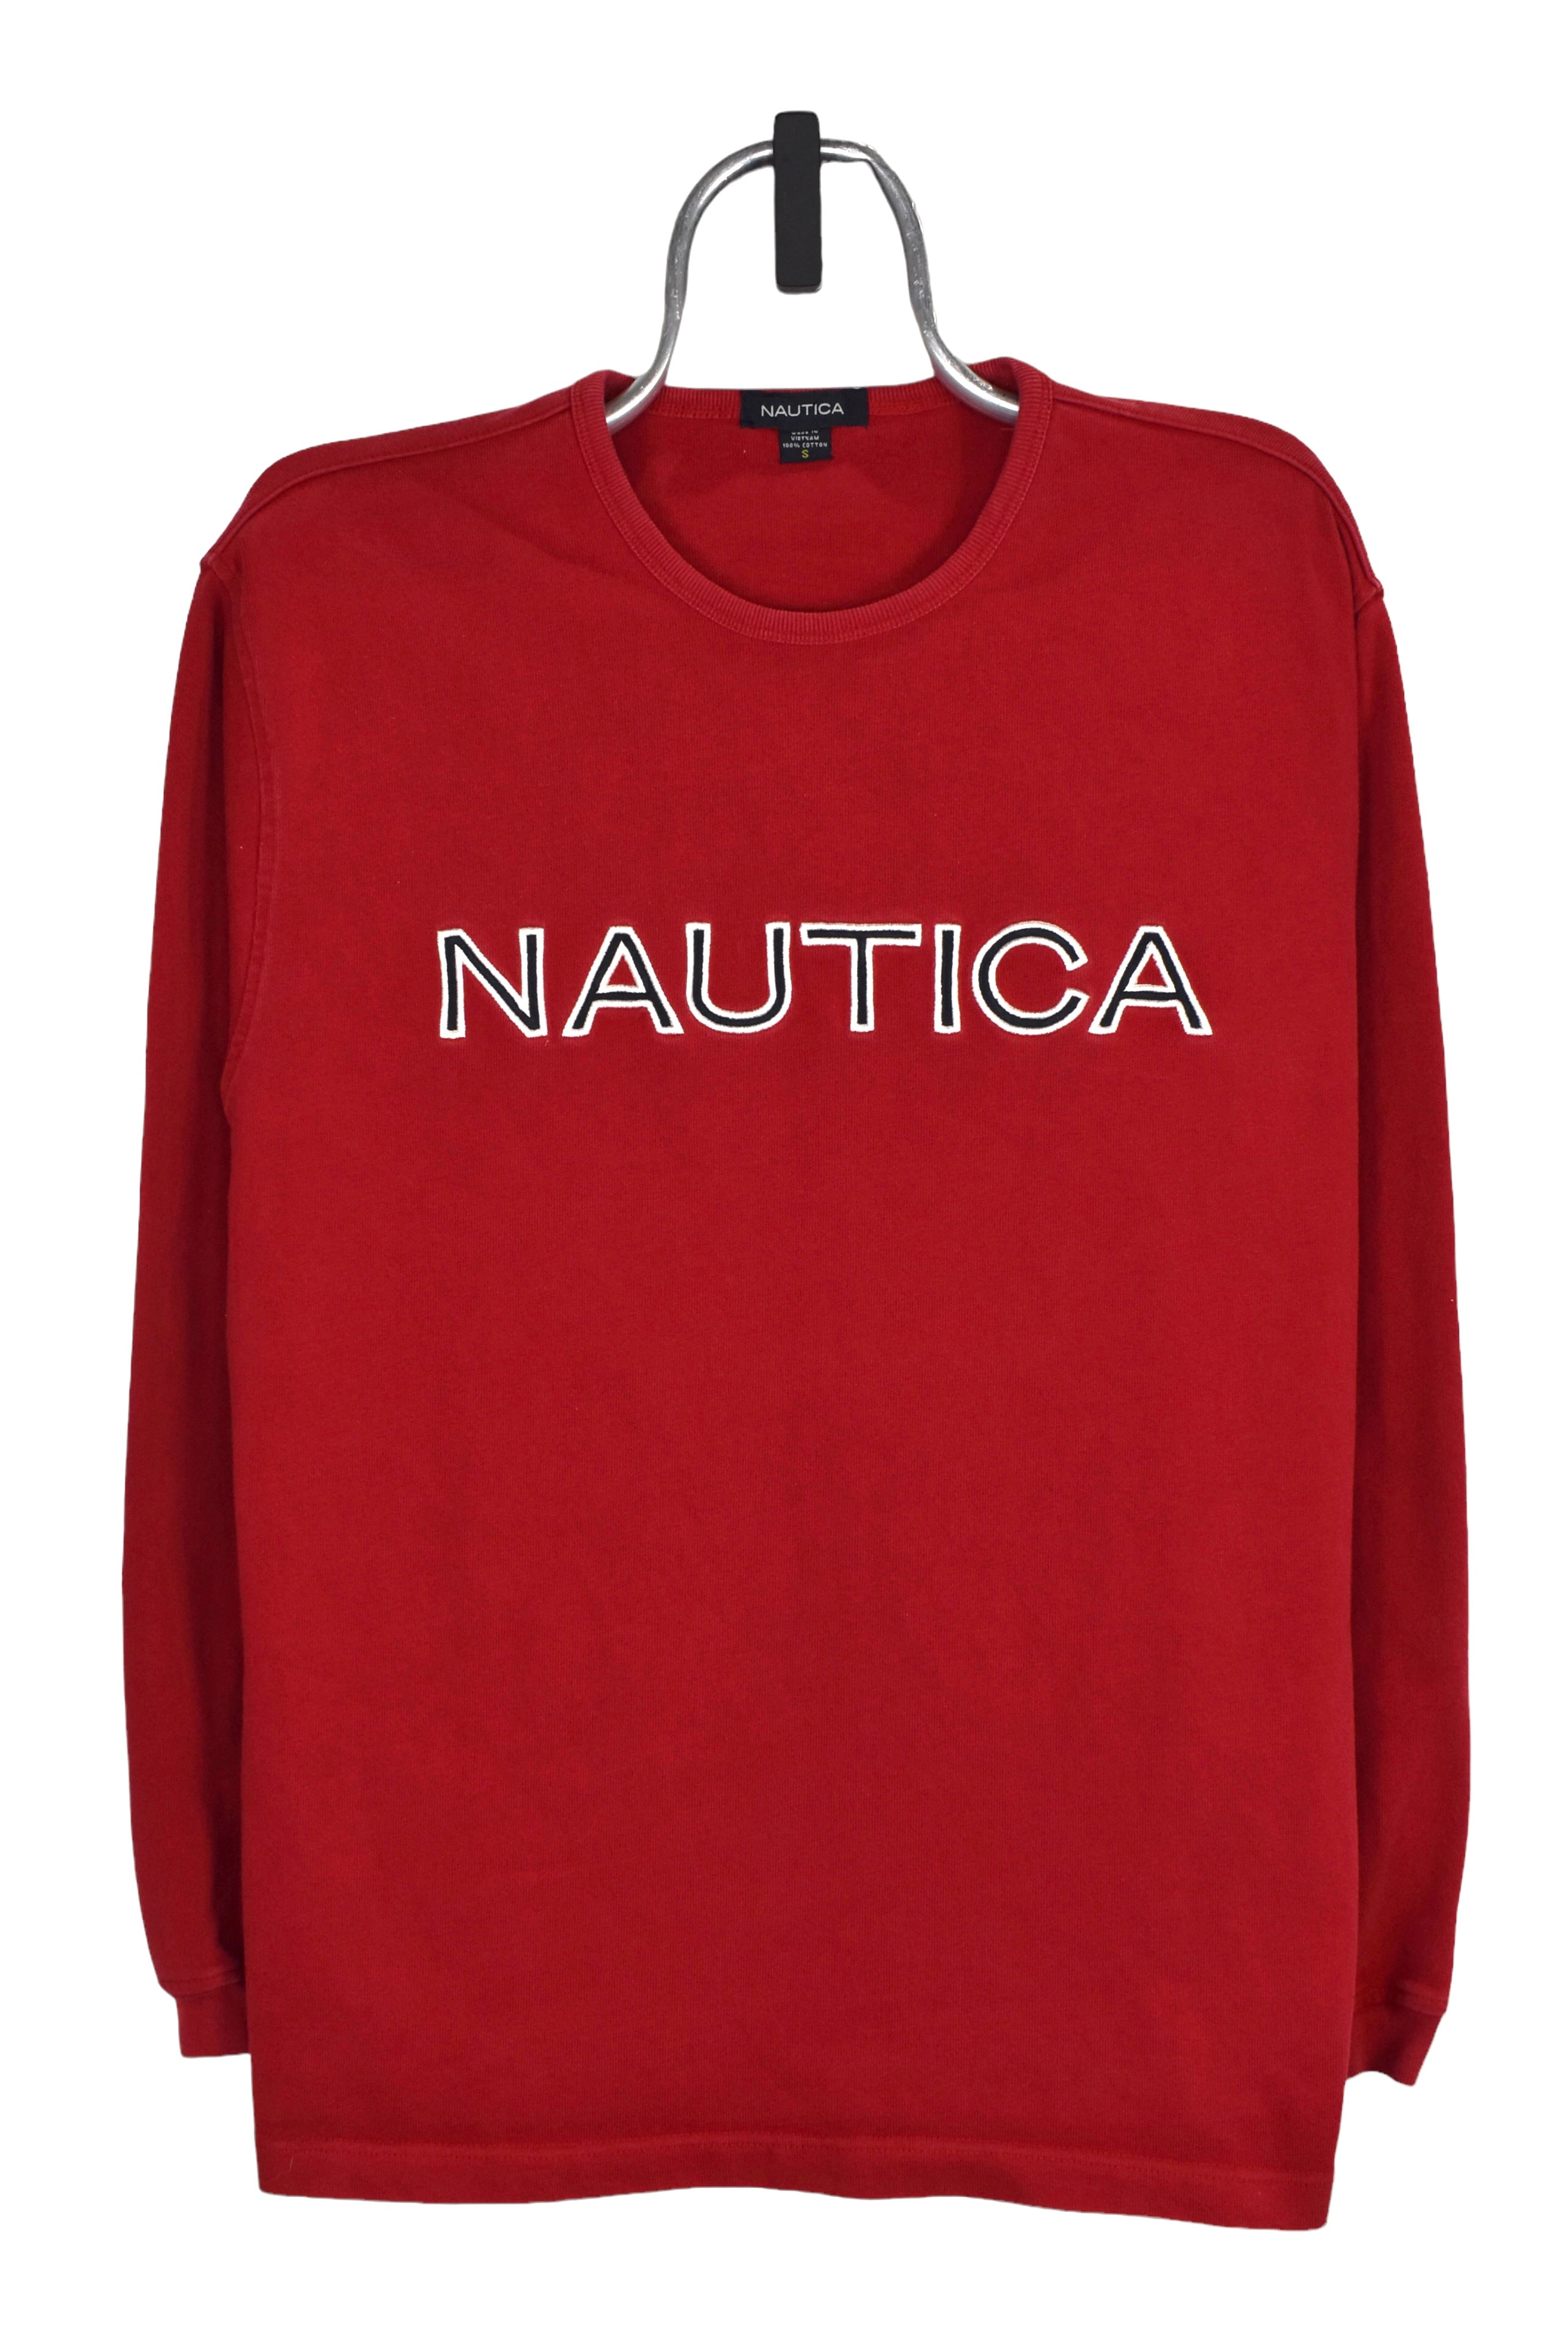 Shop Vintage Nautica Clothing